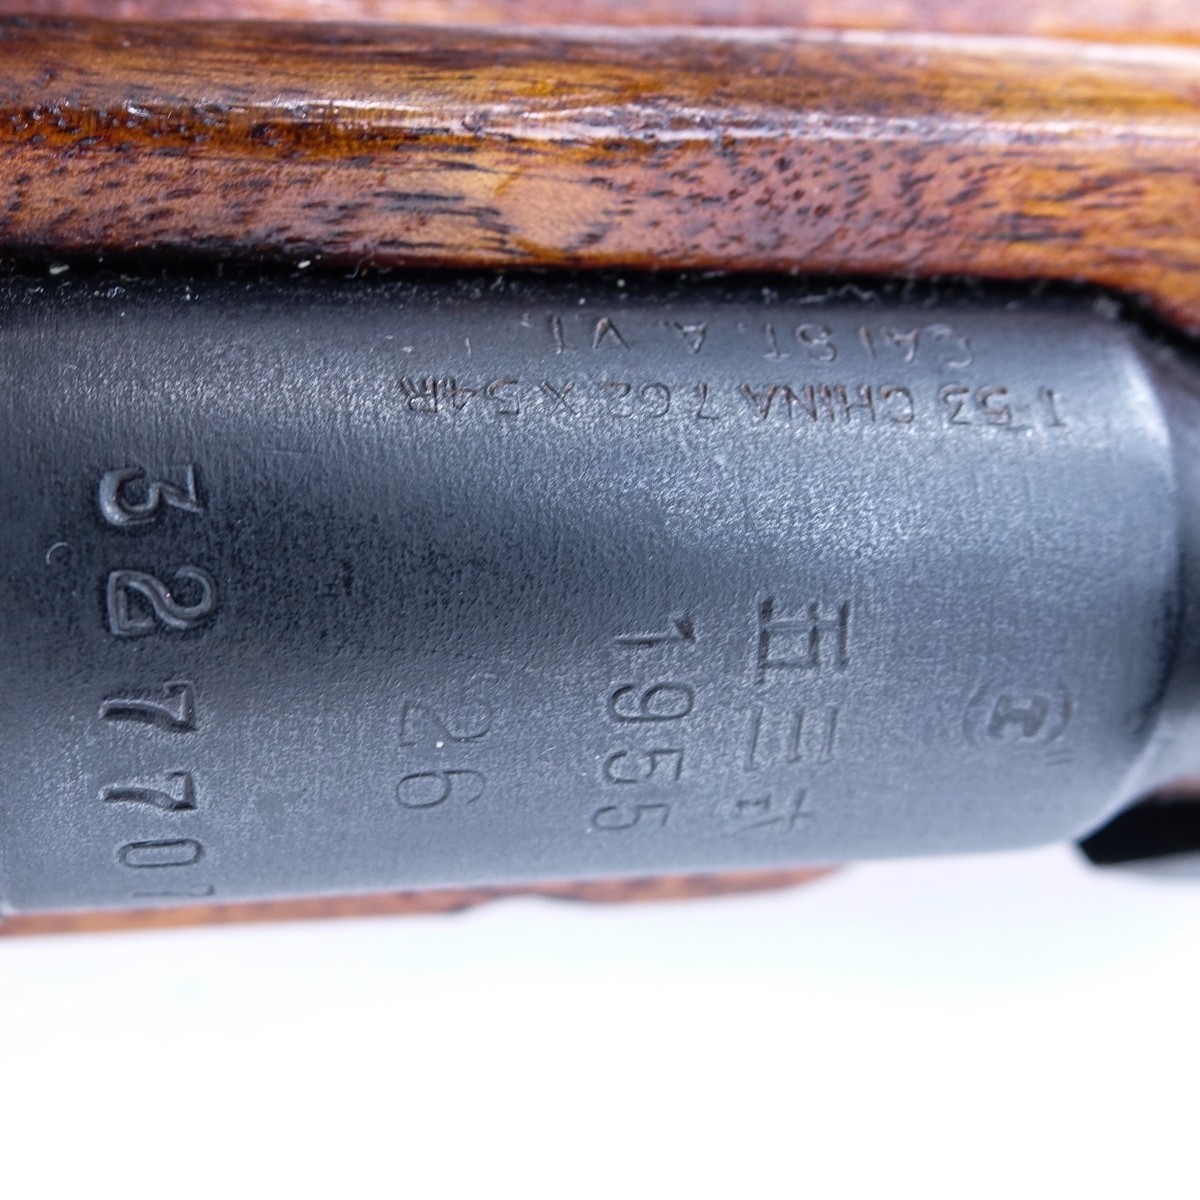 Circa 1955 Chinese Bolt Action Rifle